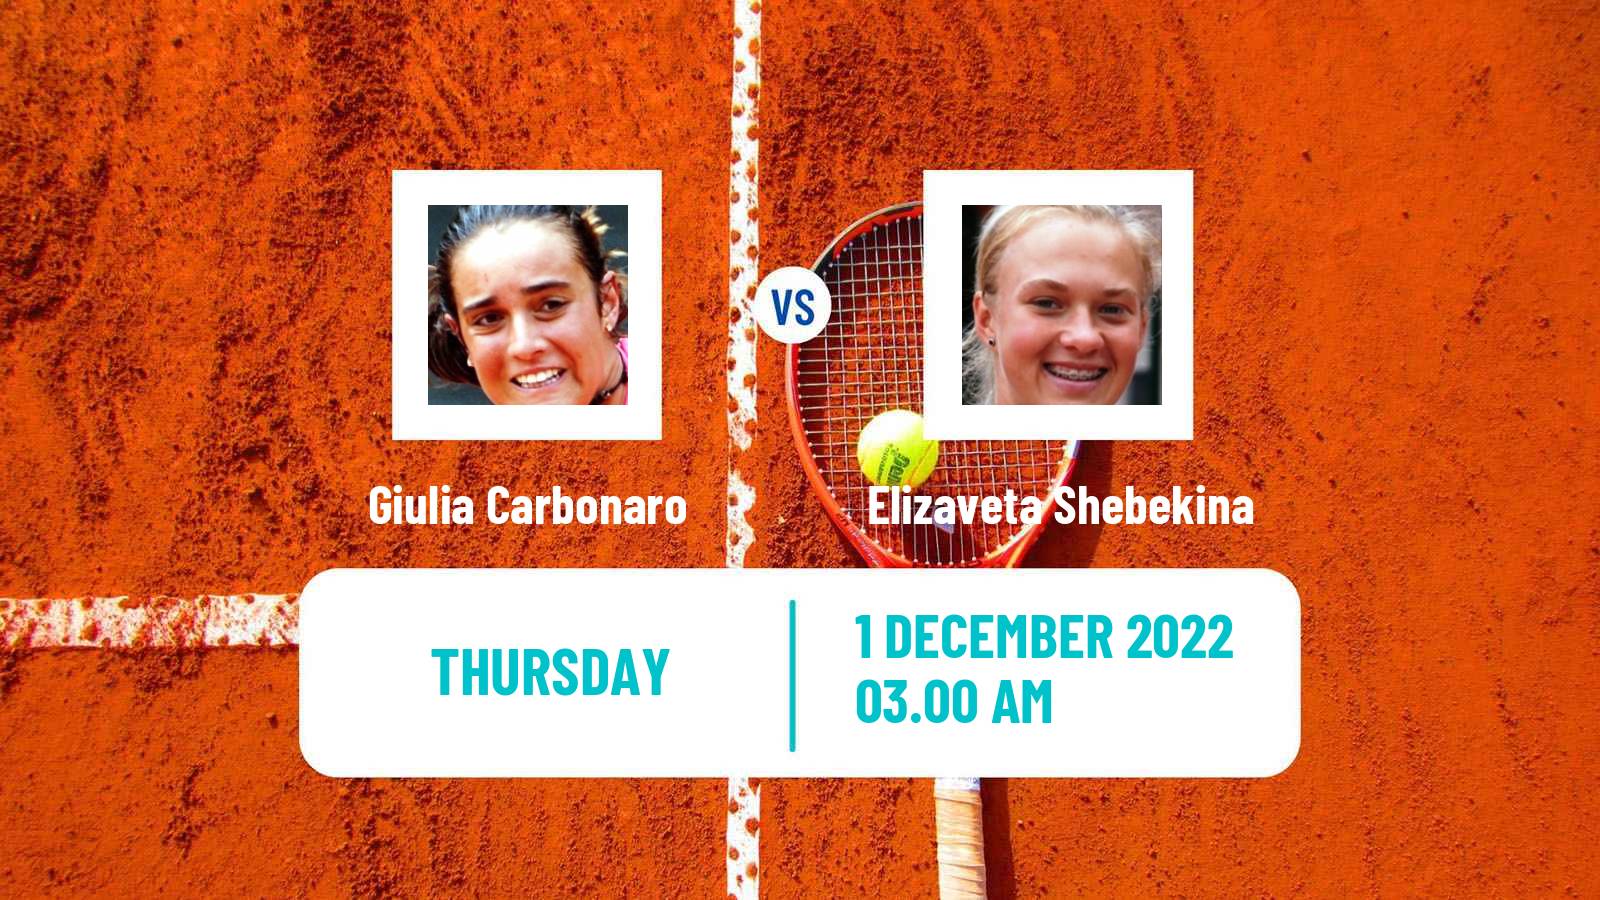 Tennis ITF Tournaments Giulia Carbonaro - Elizaveta Shebekina